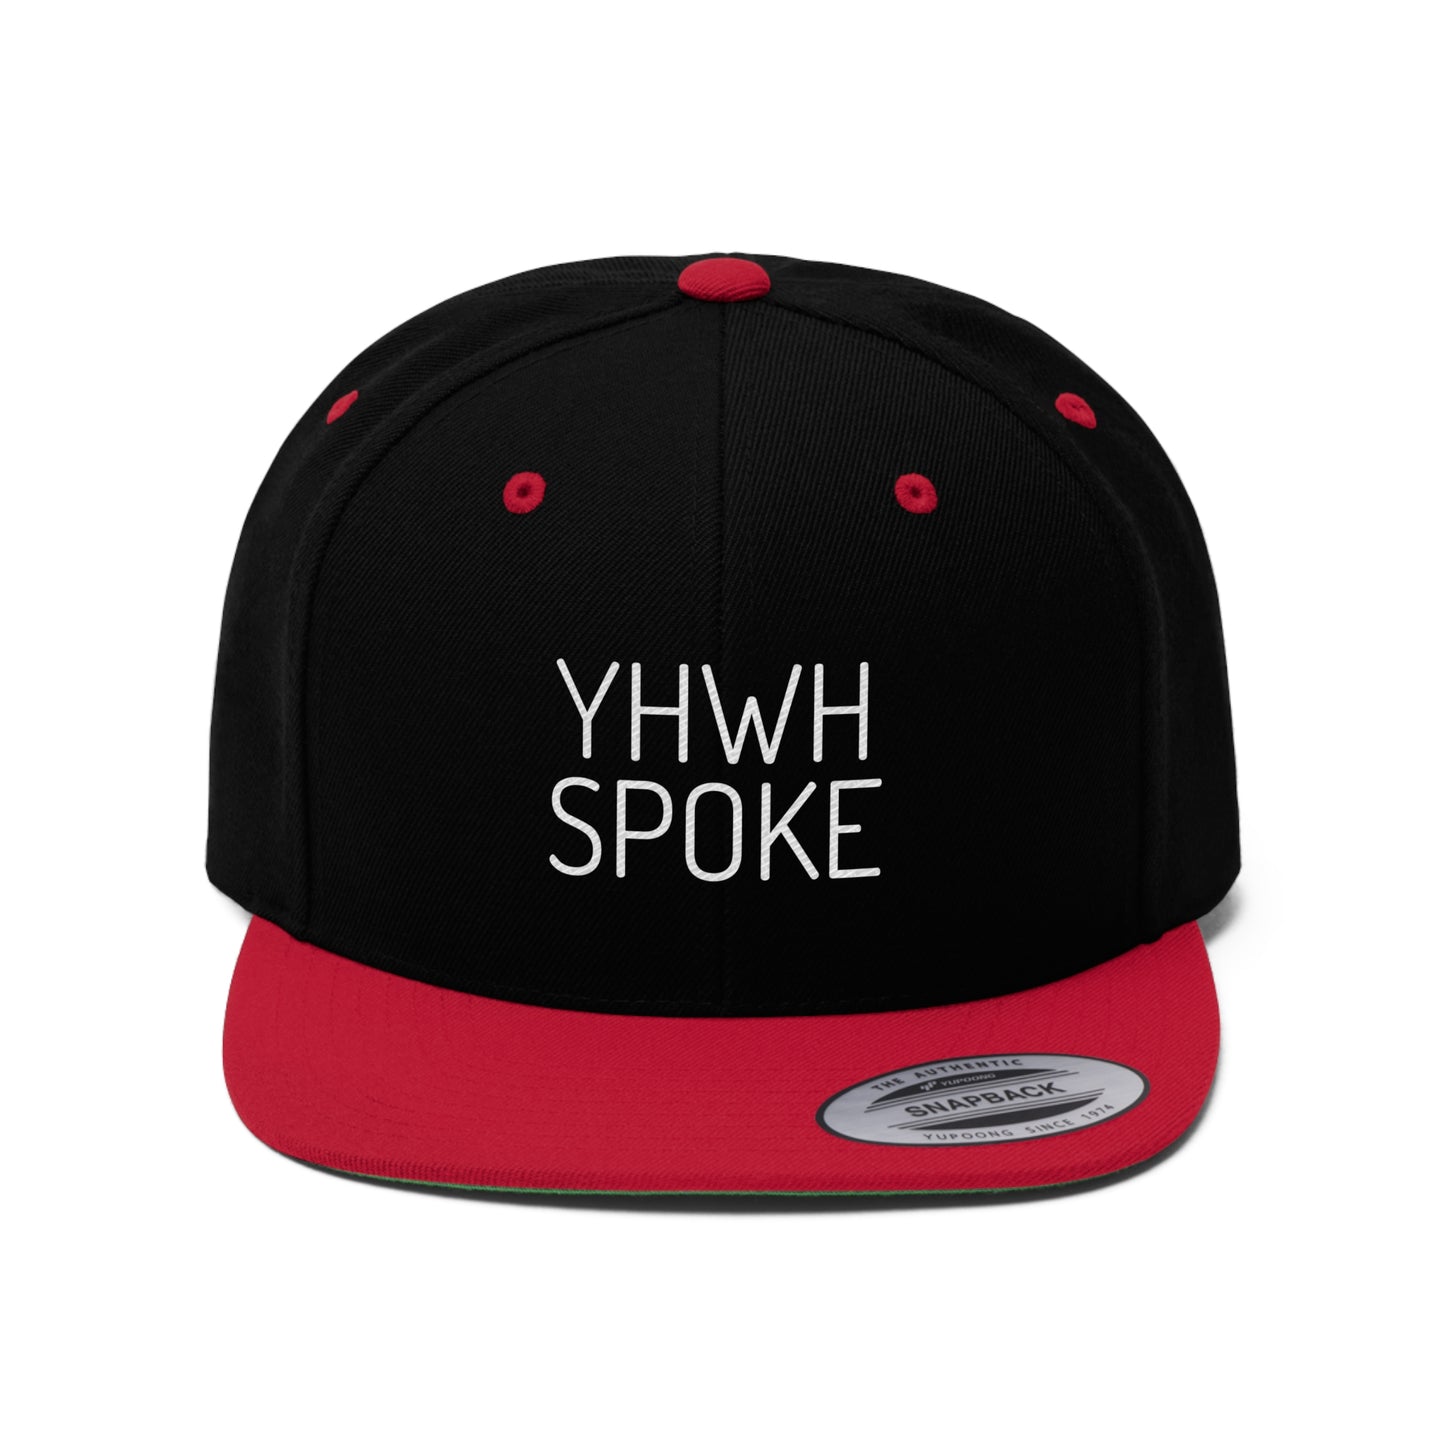 YHWH SPOKE Snapback Hat